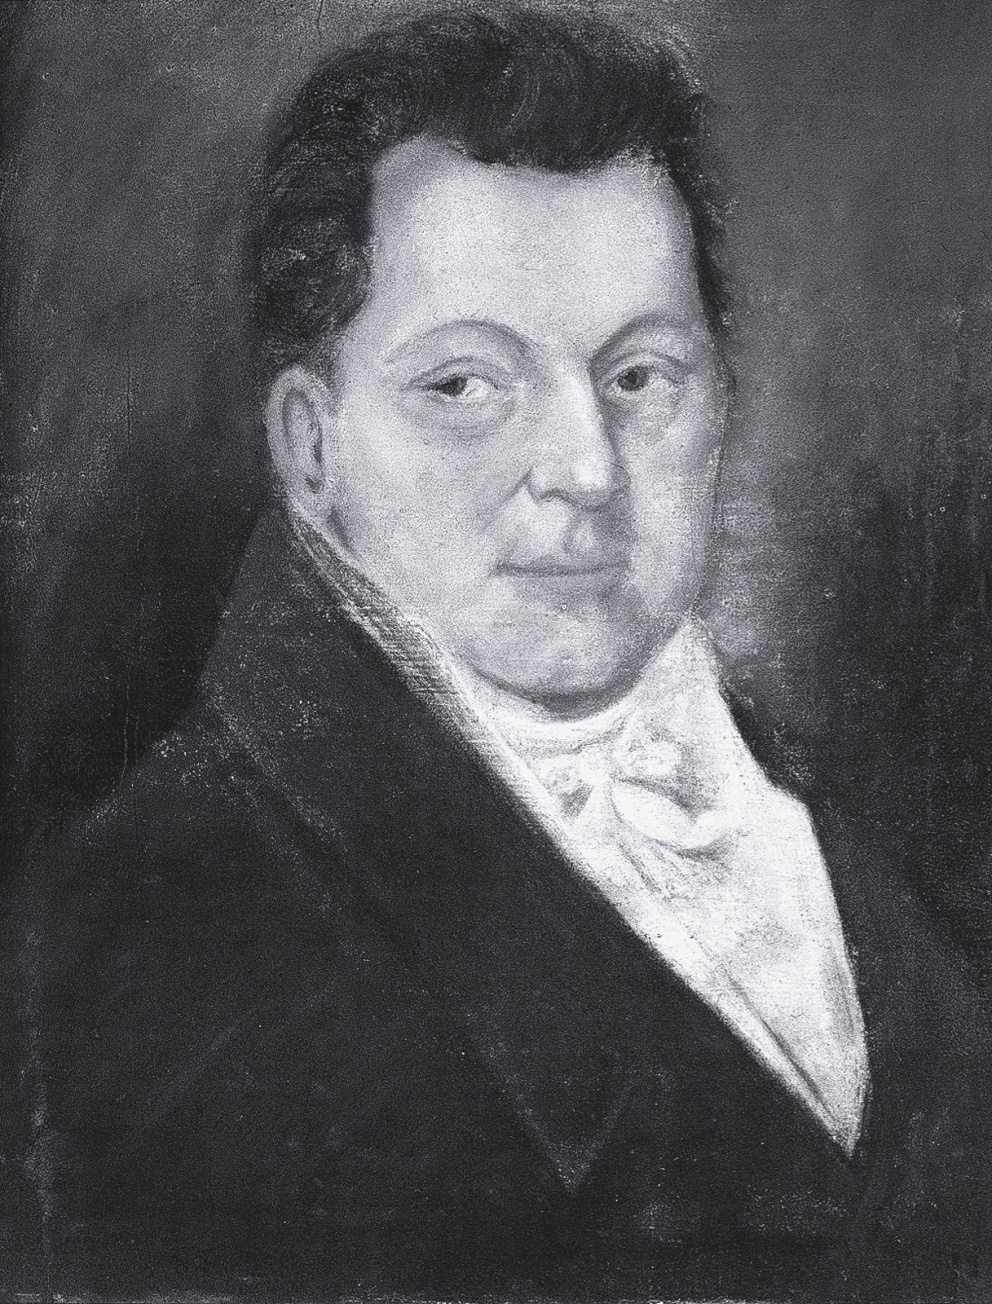 Josef Vitus Becher